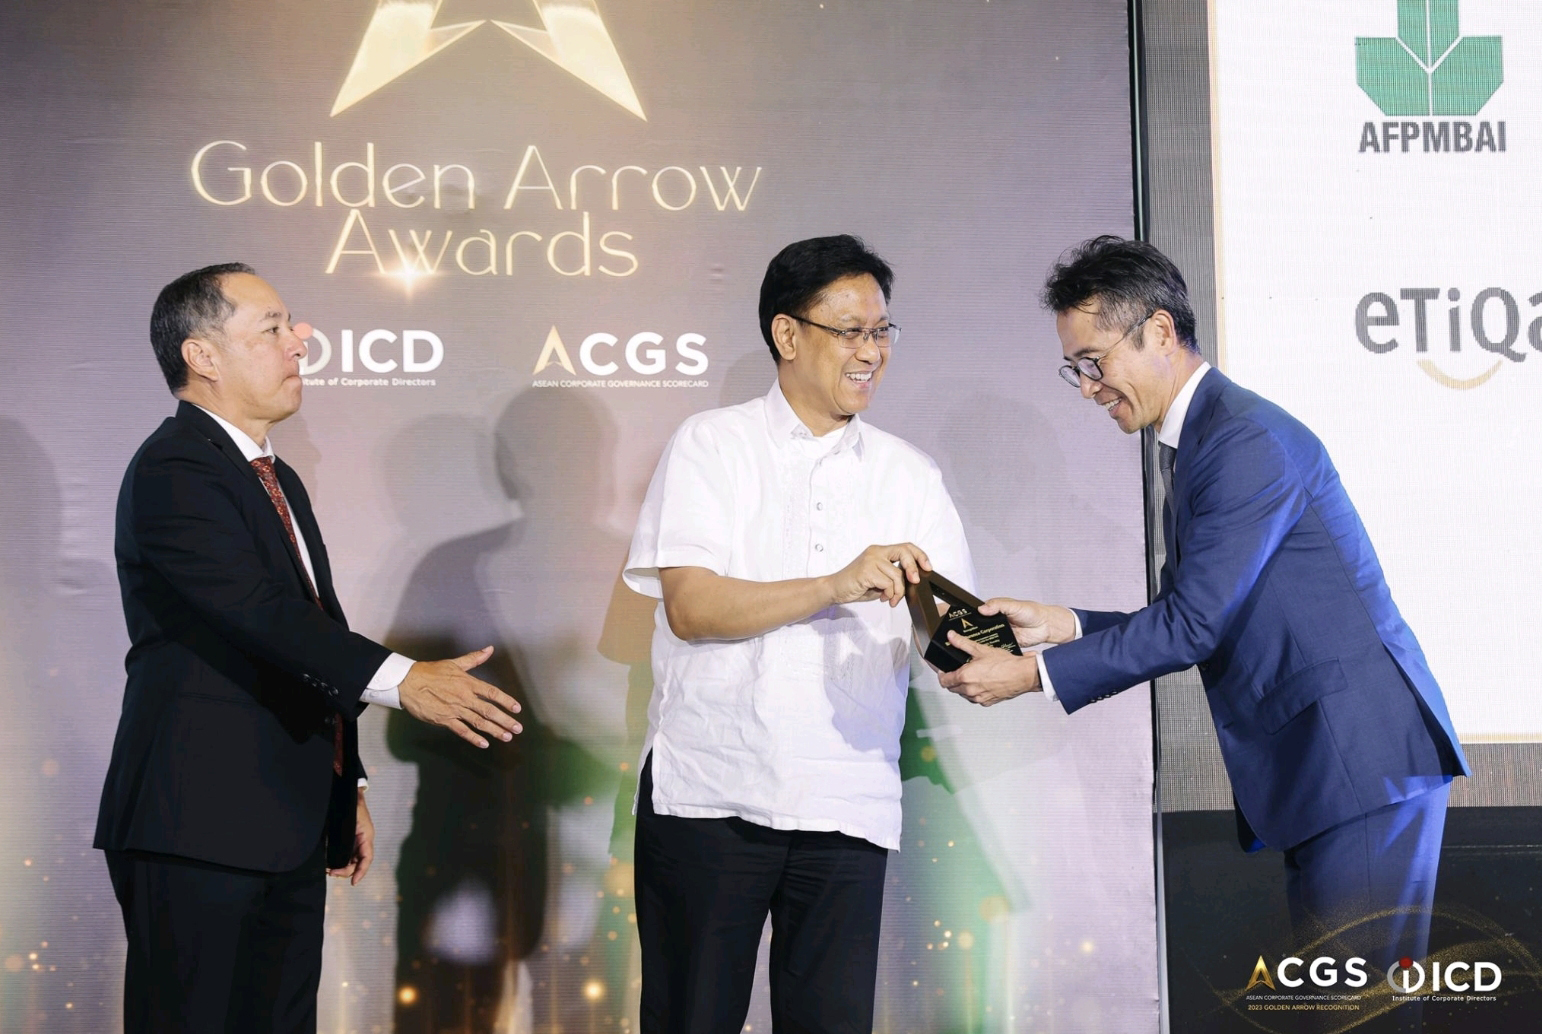 BPI MS receives 2nd Golden Arrow Award - BPI MS Insurance